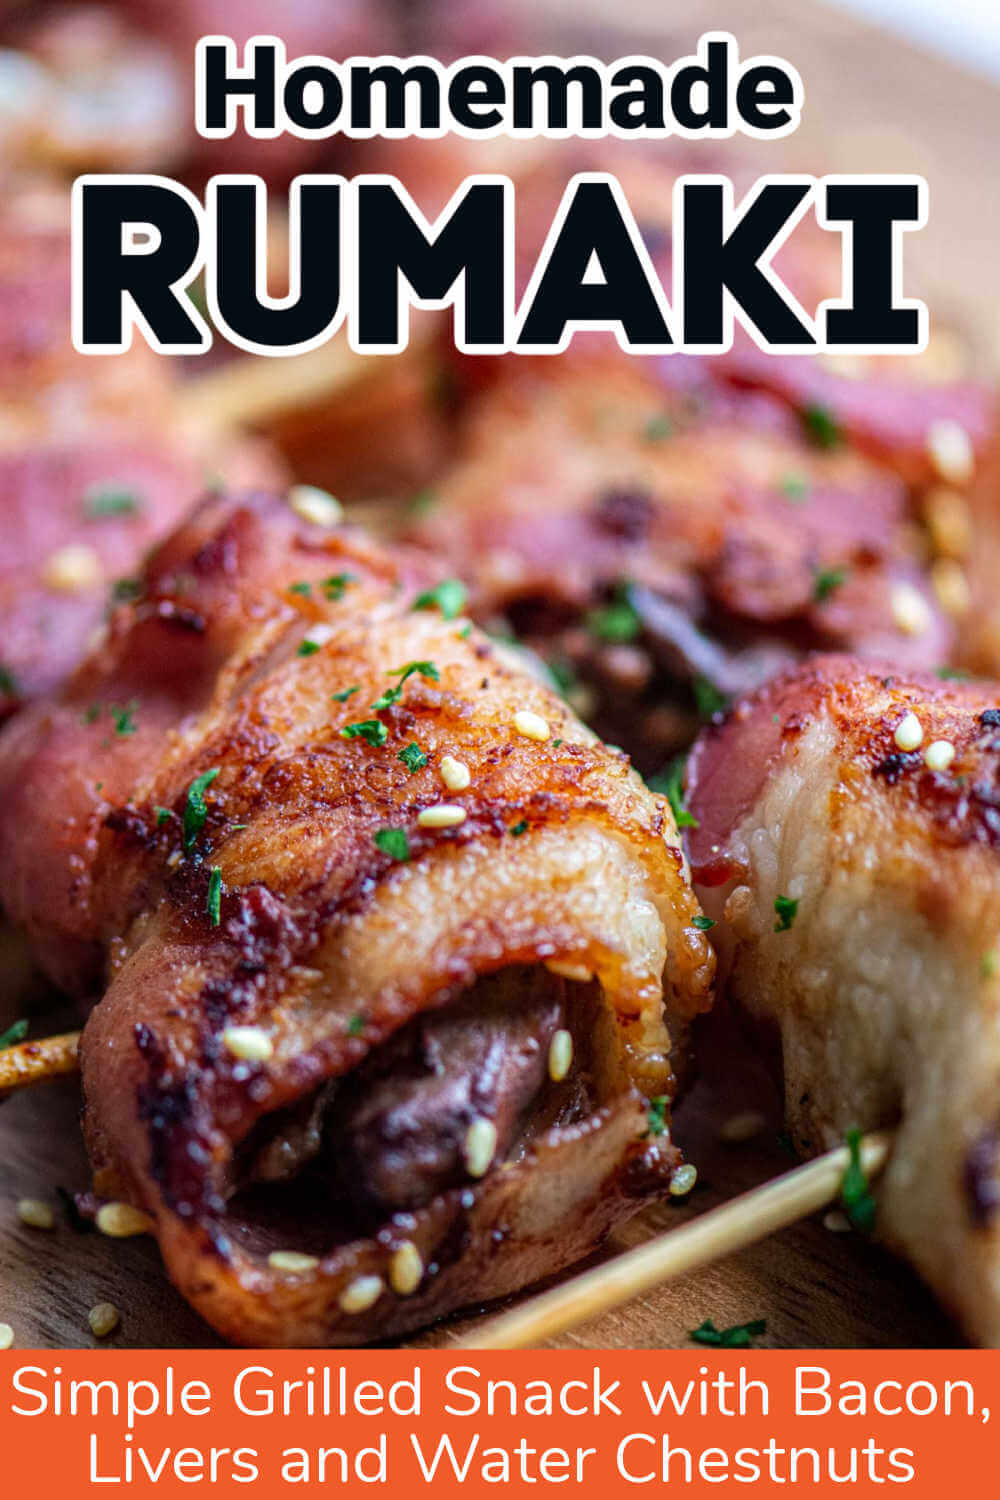 Grilled Rumaki